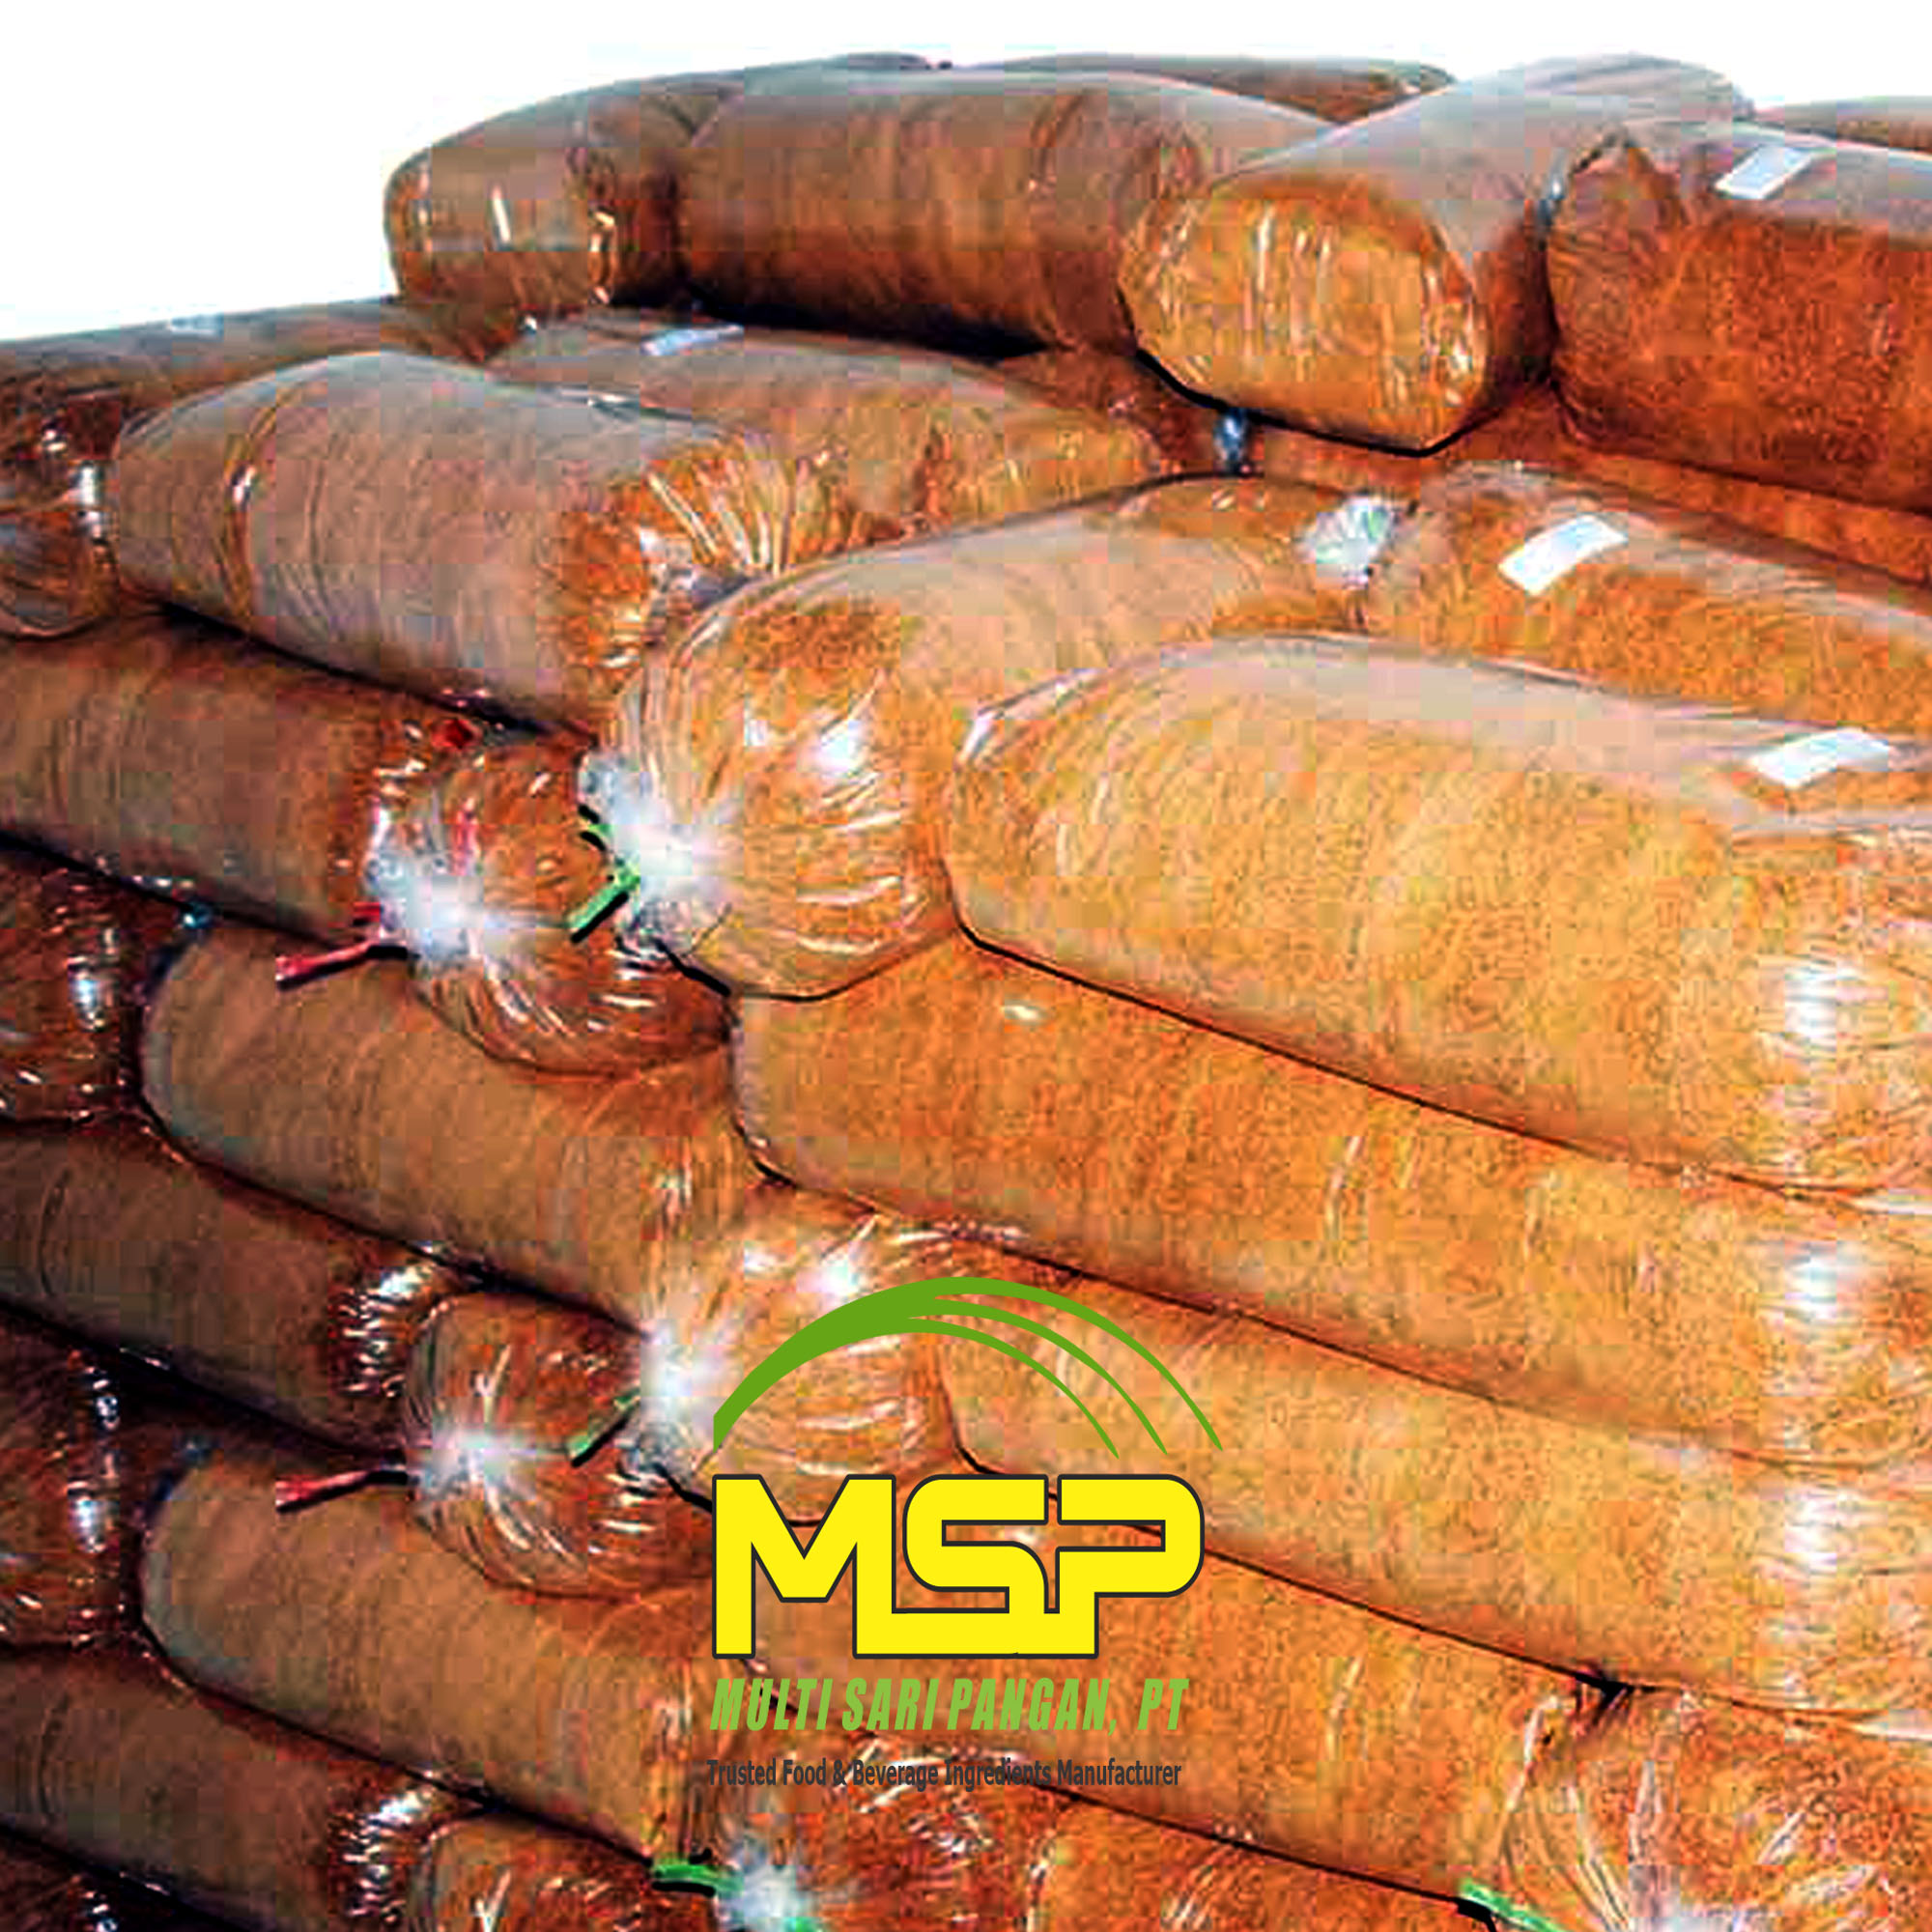 Multi Sari Pangan, Coconut Palm Sugar Manufacturer